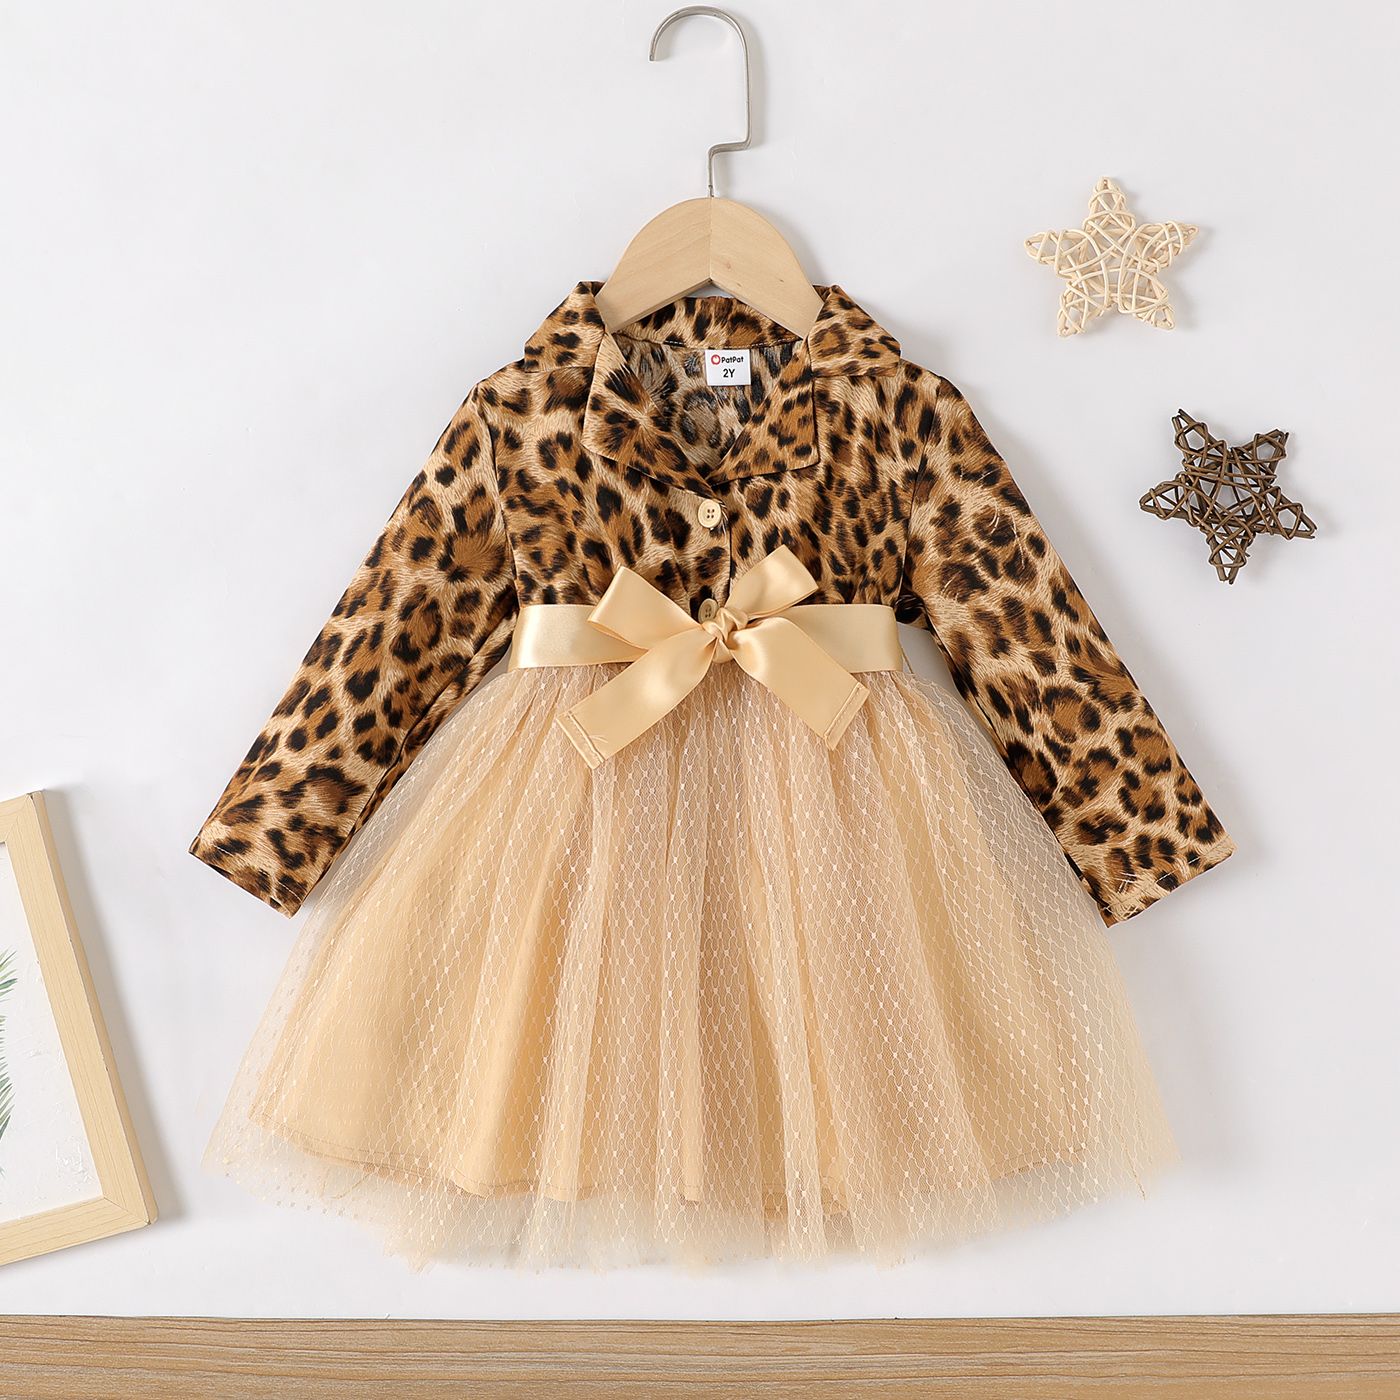 Toddler Girl Leopard Stitched Polka Dot Mesh Long Sleeve Dress